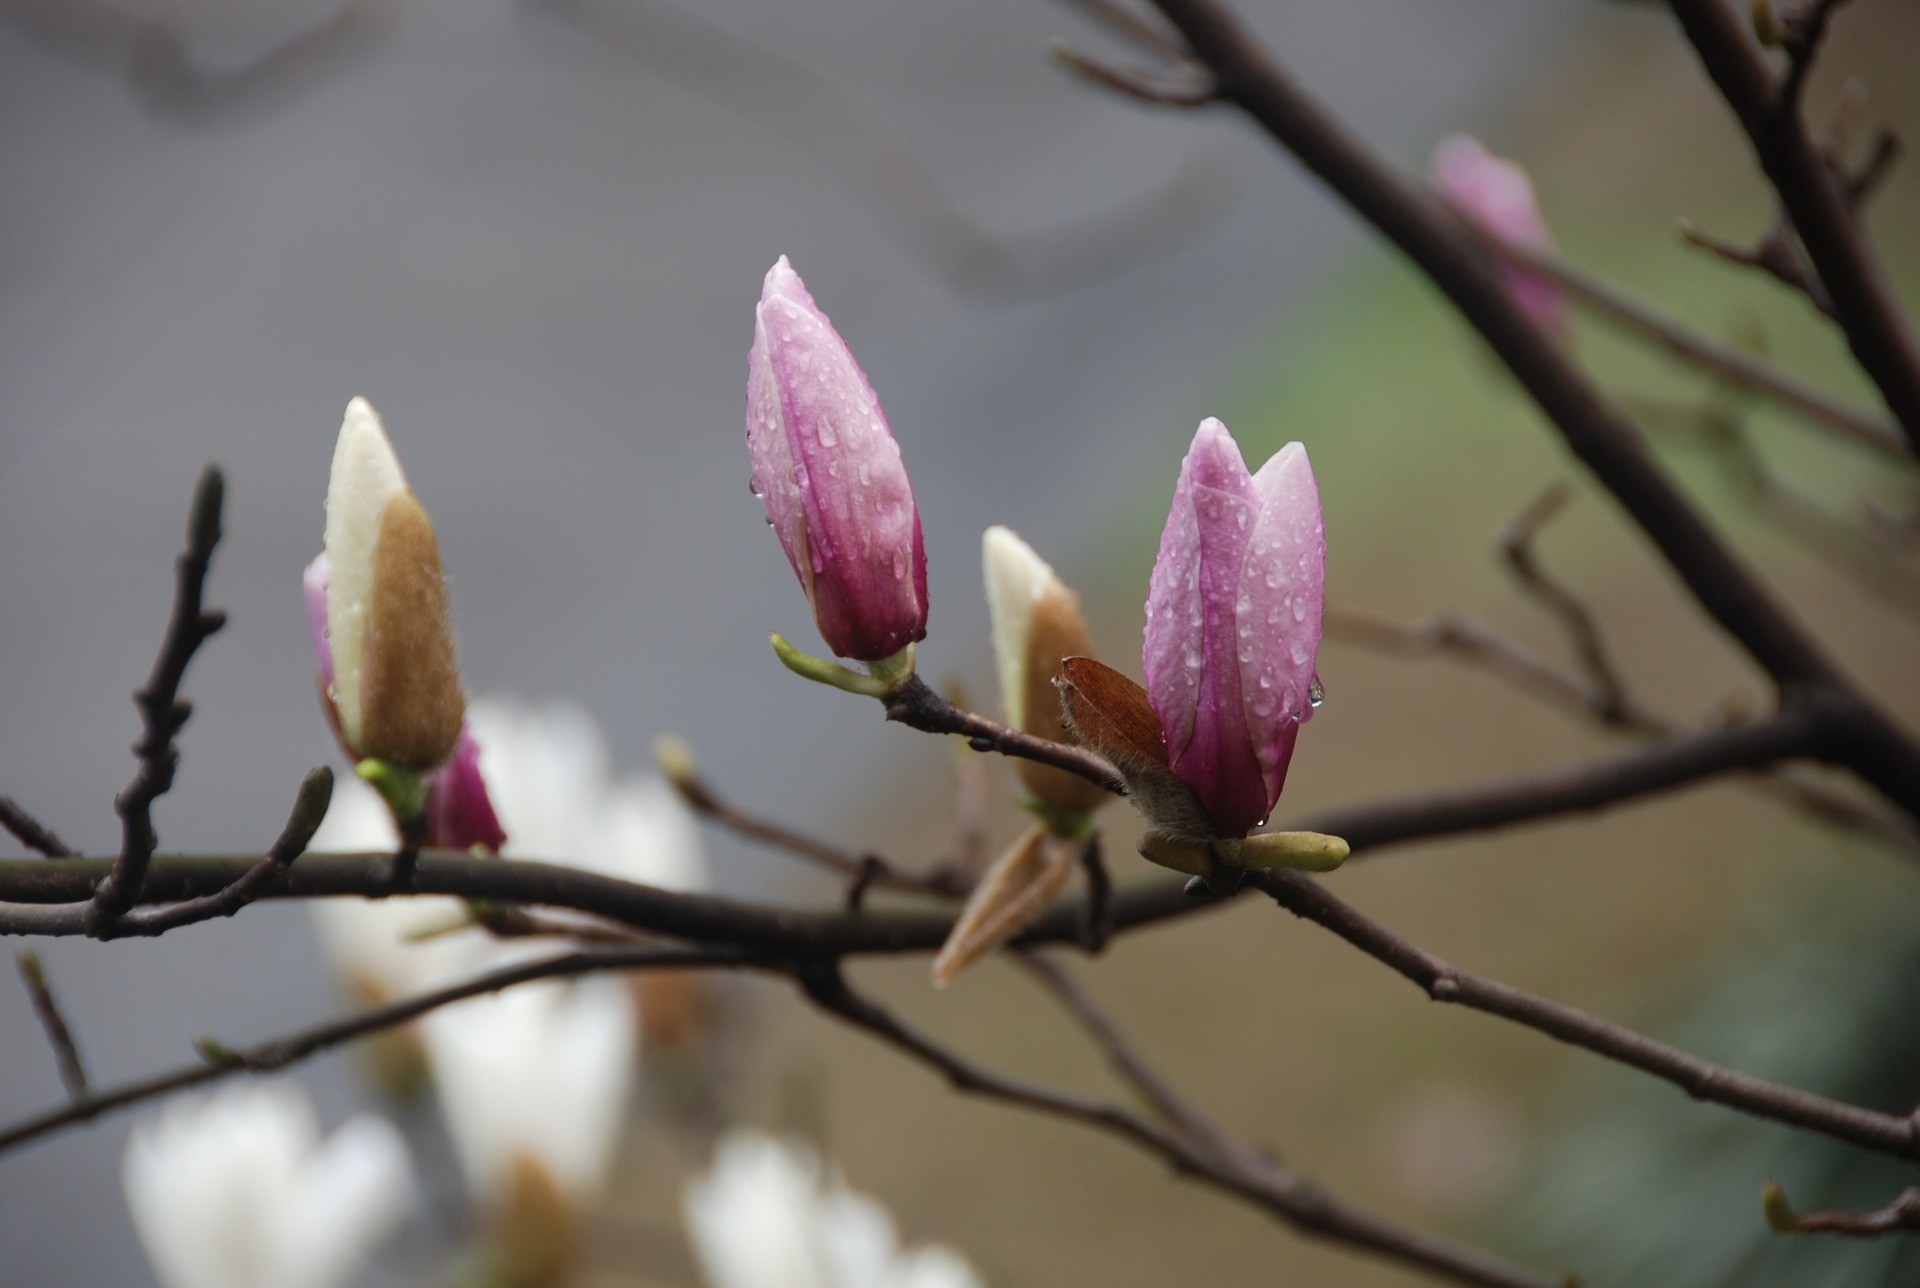 magnolia buds in rain